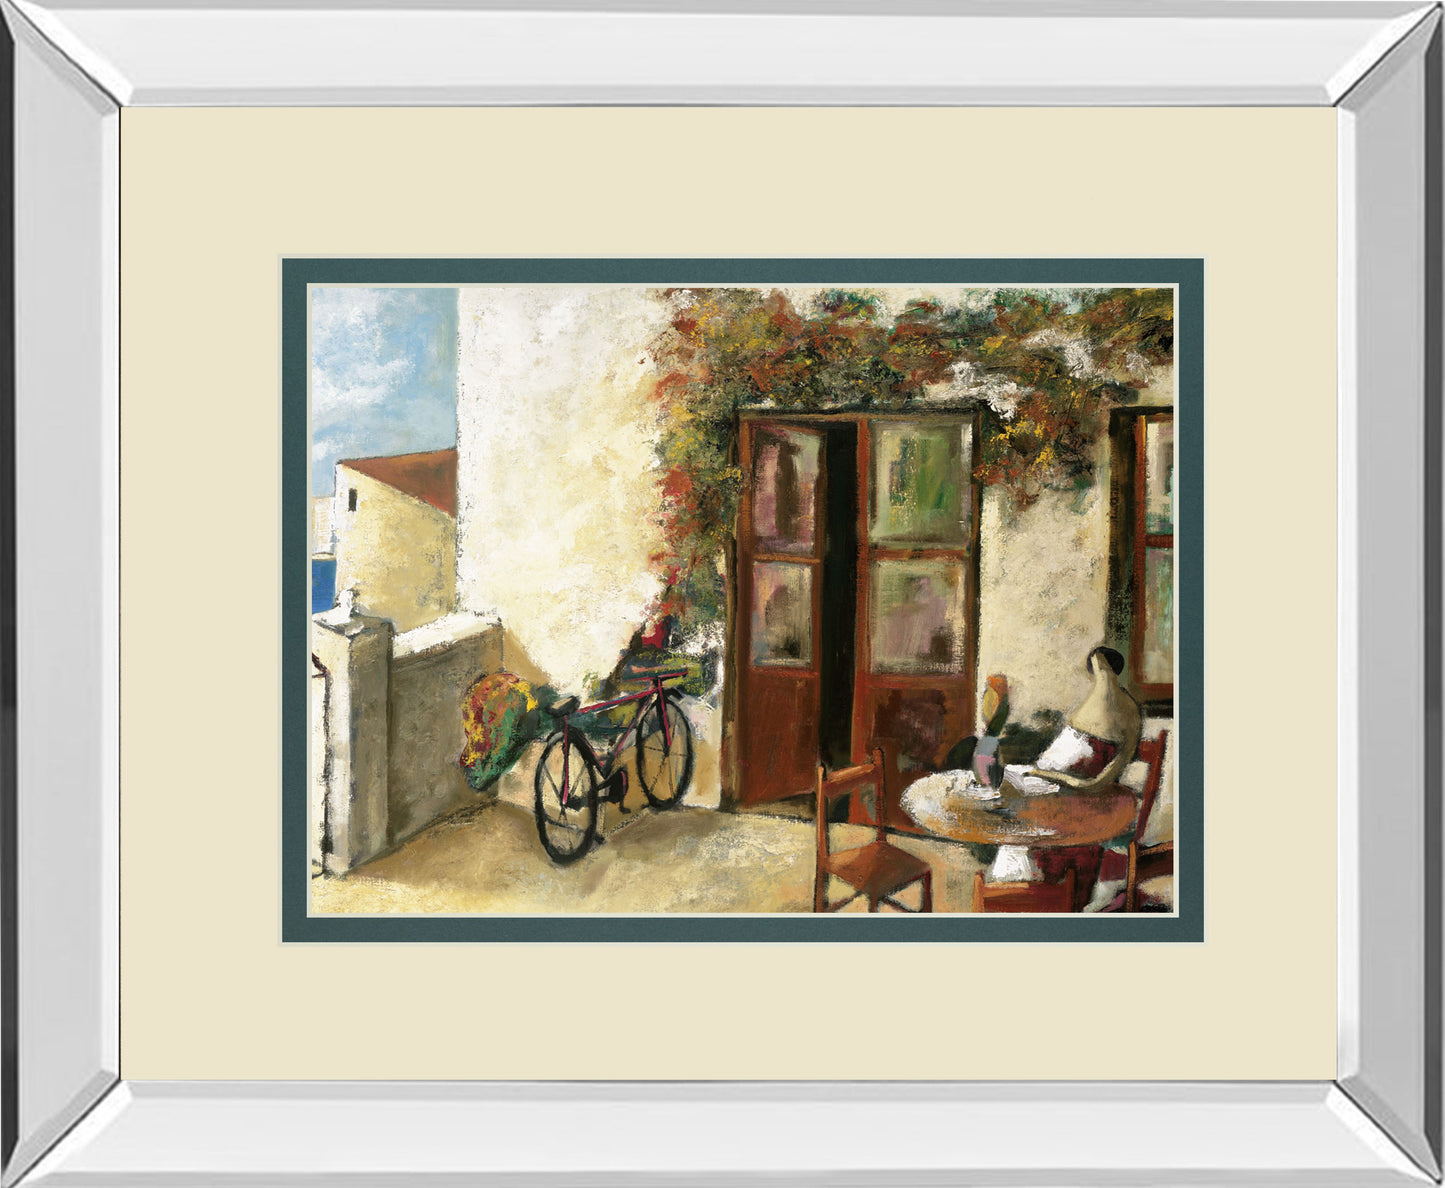 Perro Y Biciceleta By Lourengo D. Mirrored Frame - Beige